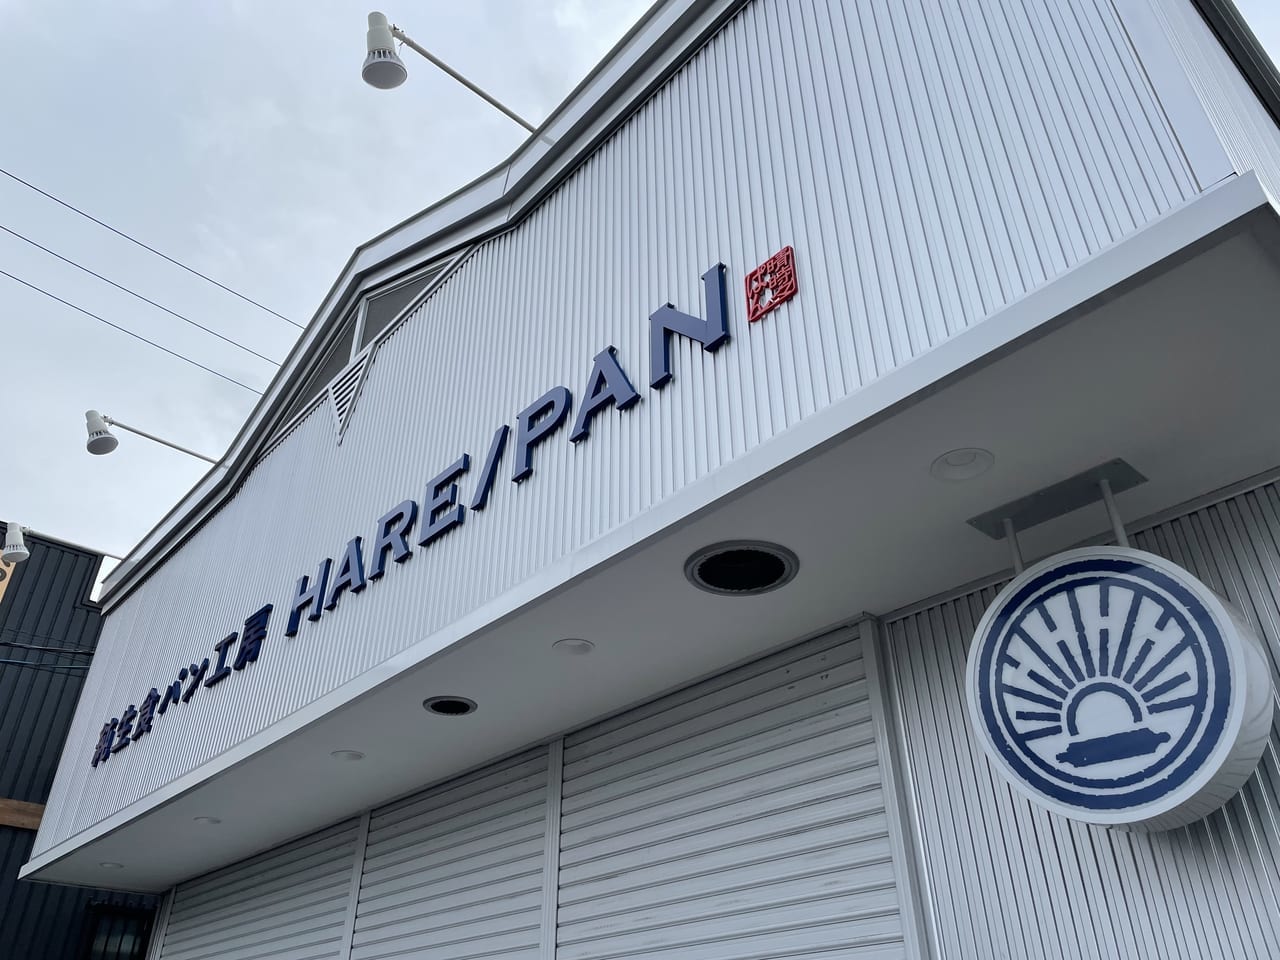 HARE/PAN札幌店